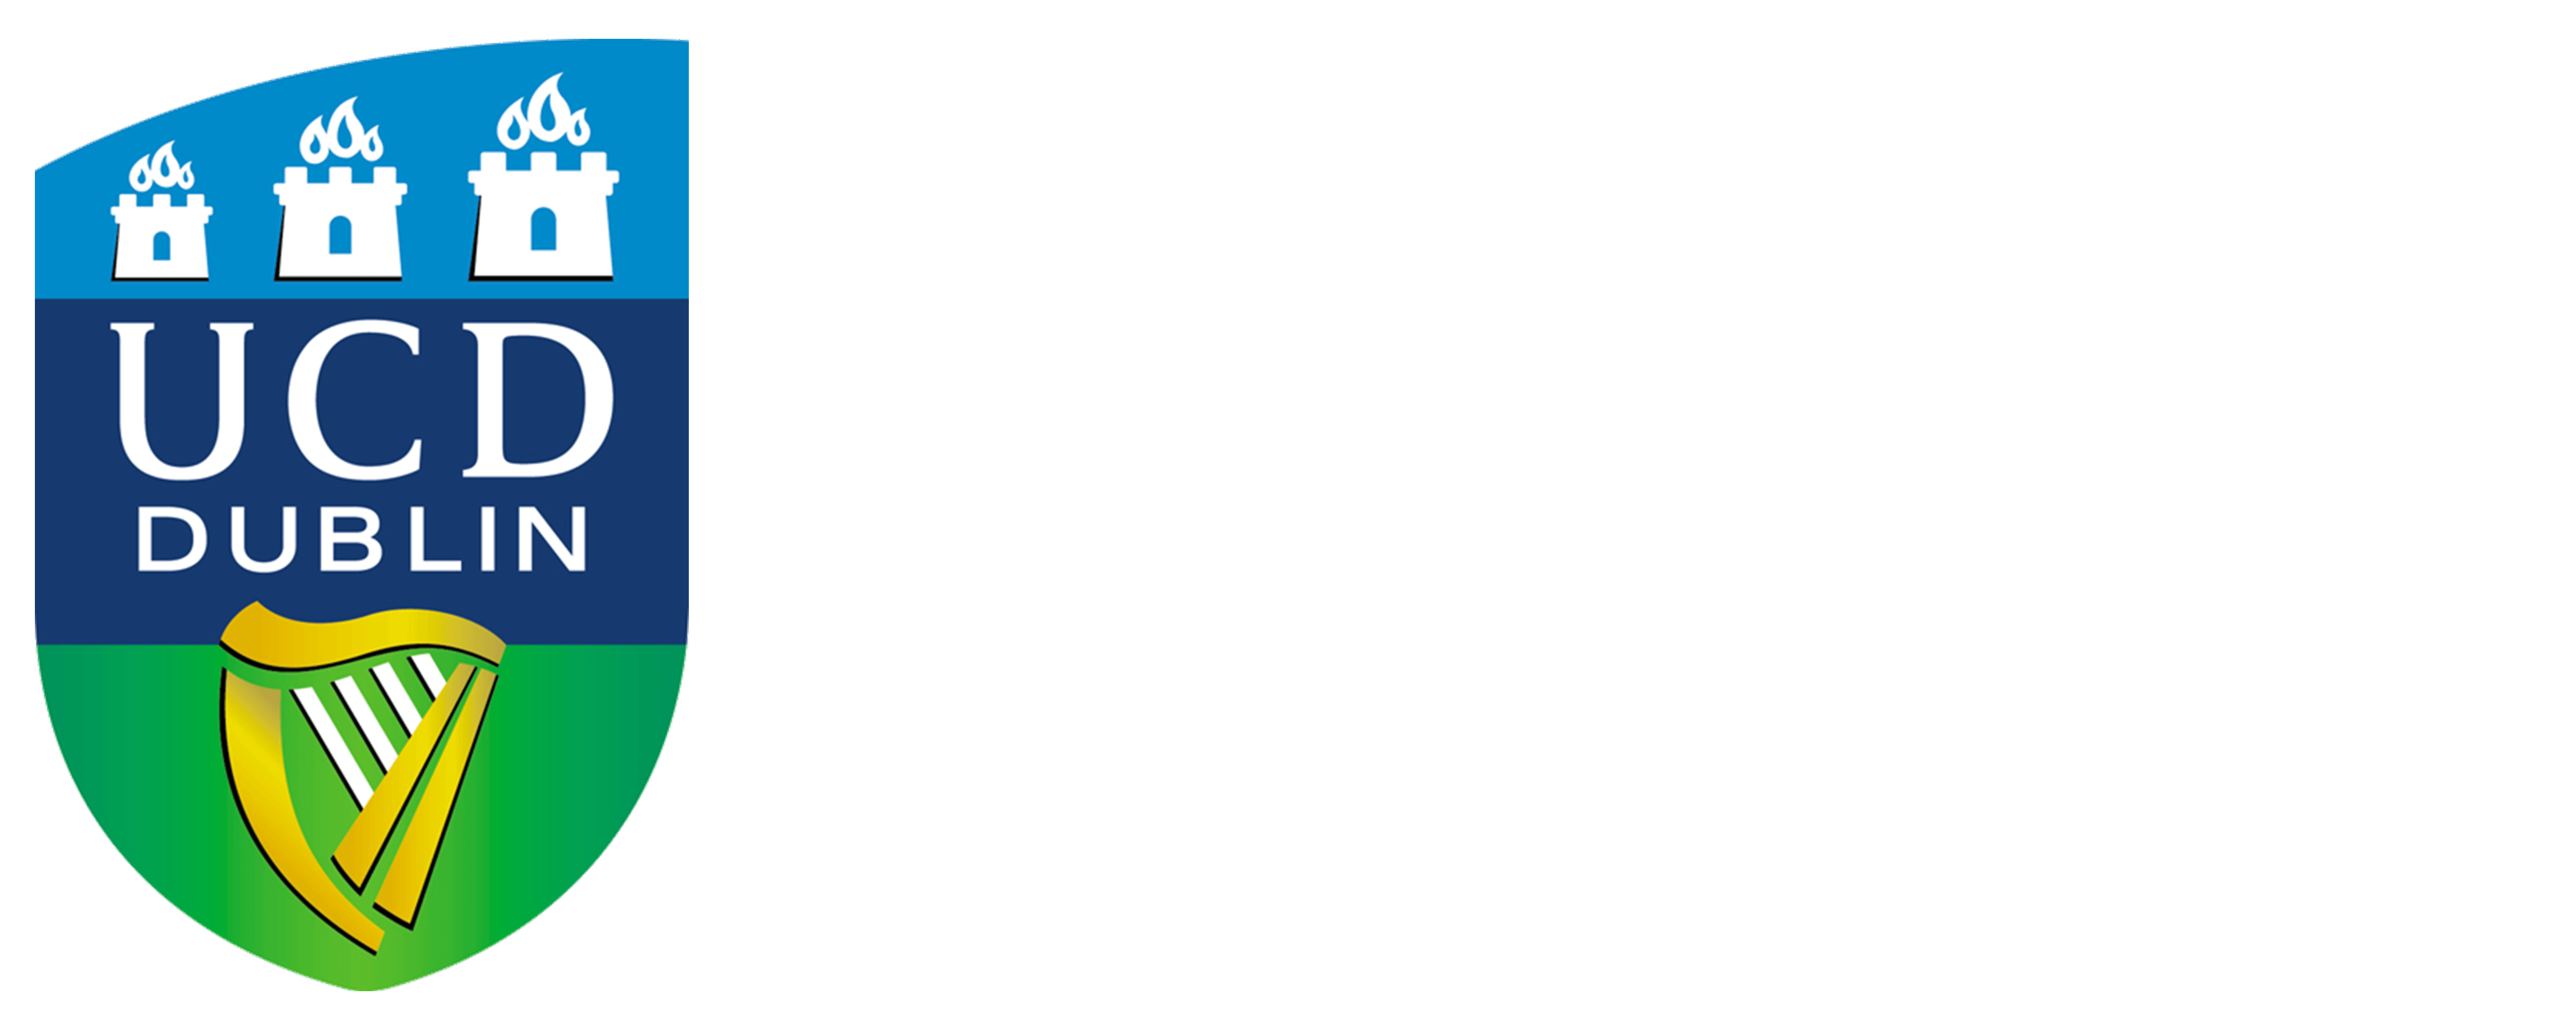 UCD Logo - image and logos. UCD Smurfit School